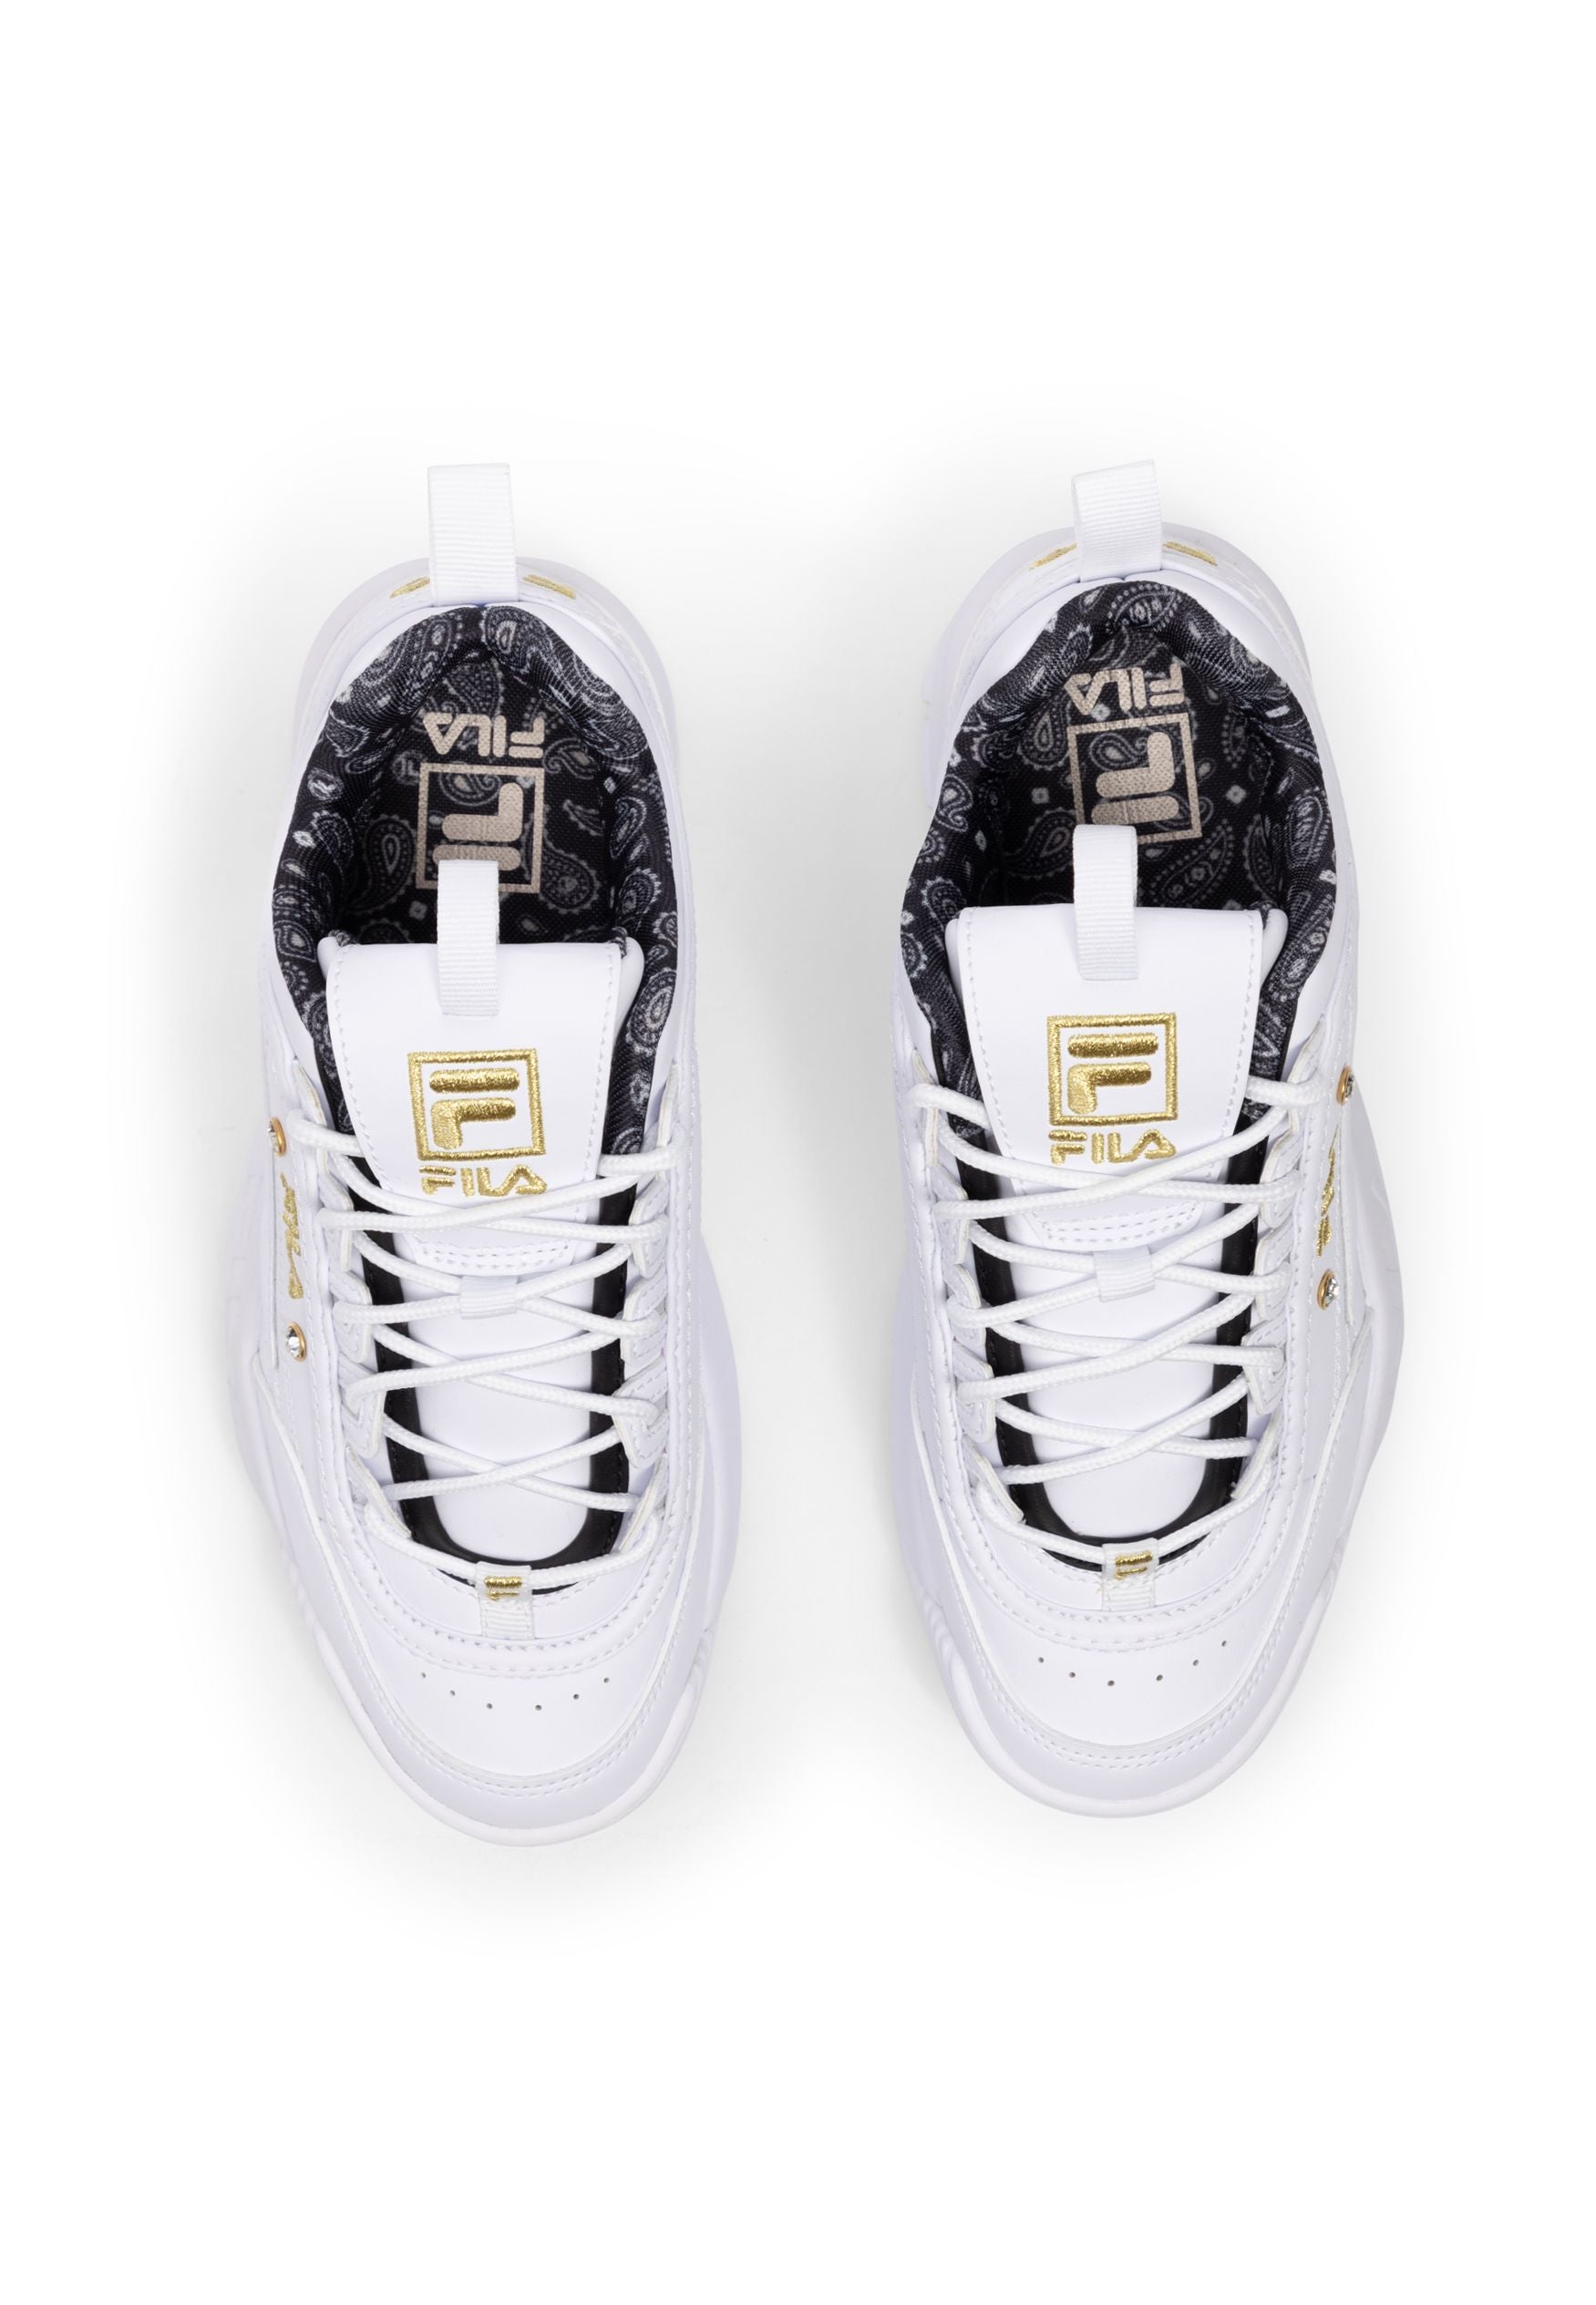 Disruptor P Wmn in White-Gold Sneakers Fila   